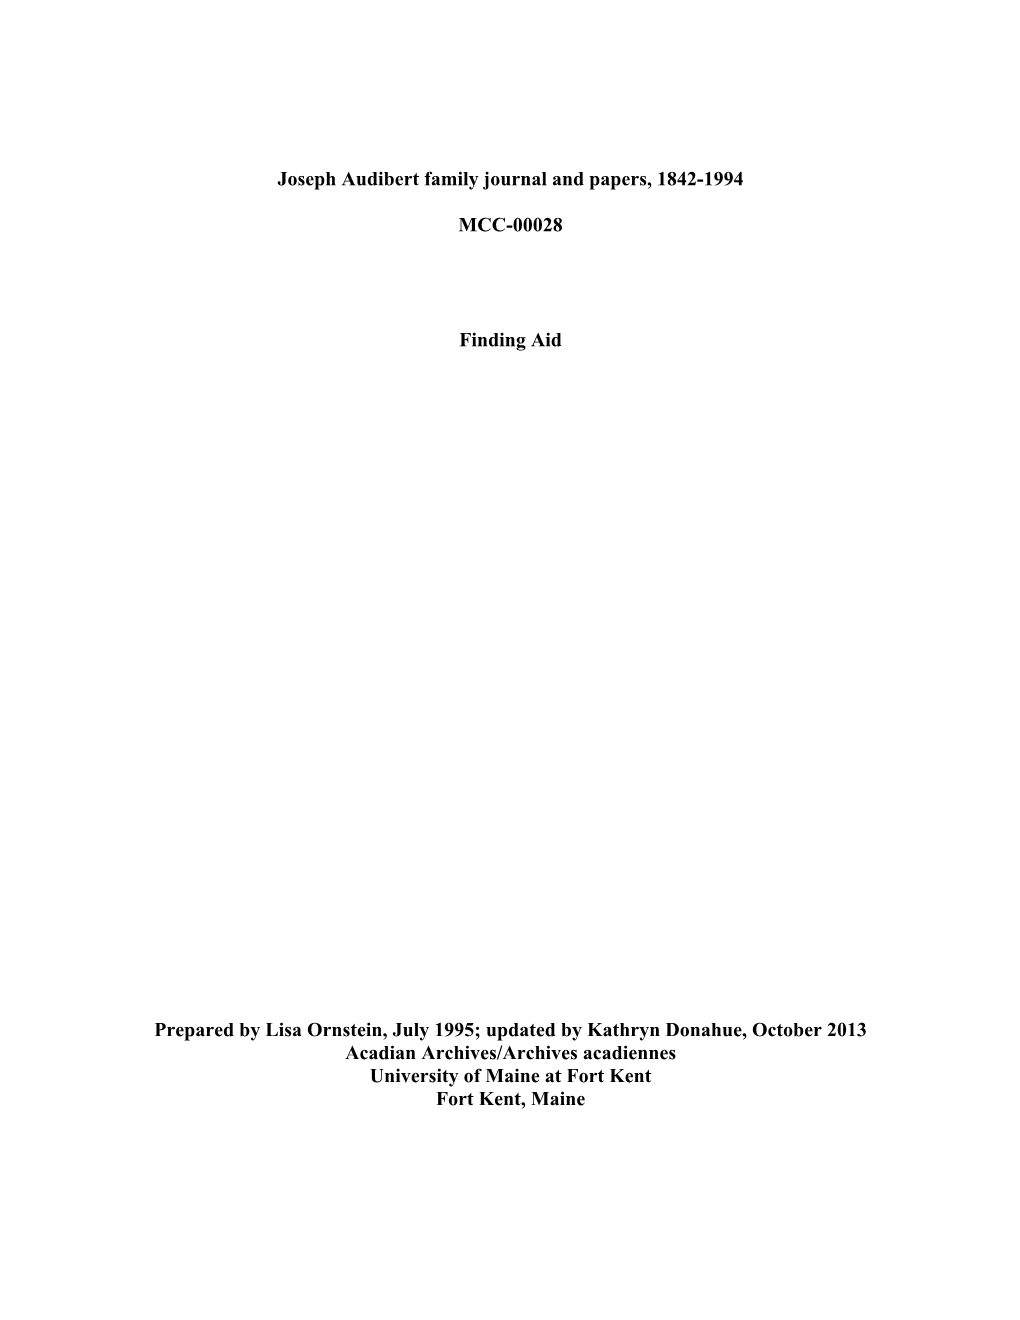 Joseph Audibert Family Journal and Papers, 1842-1994